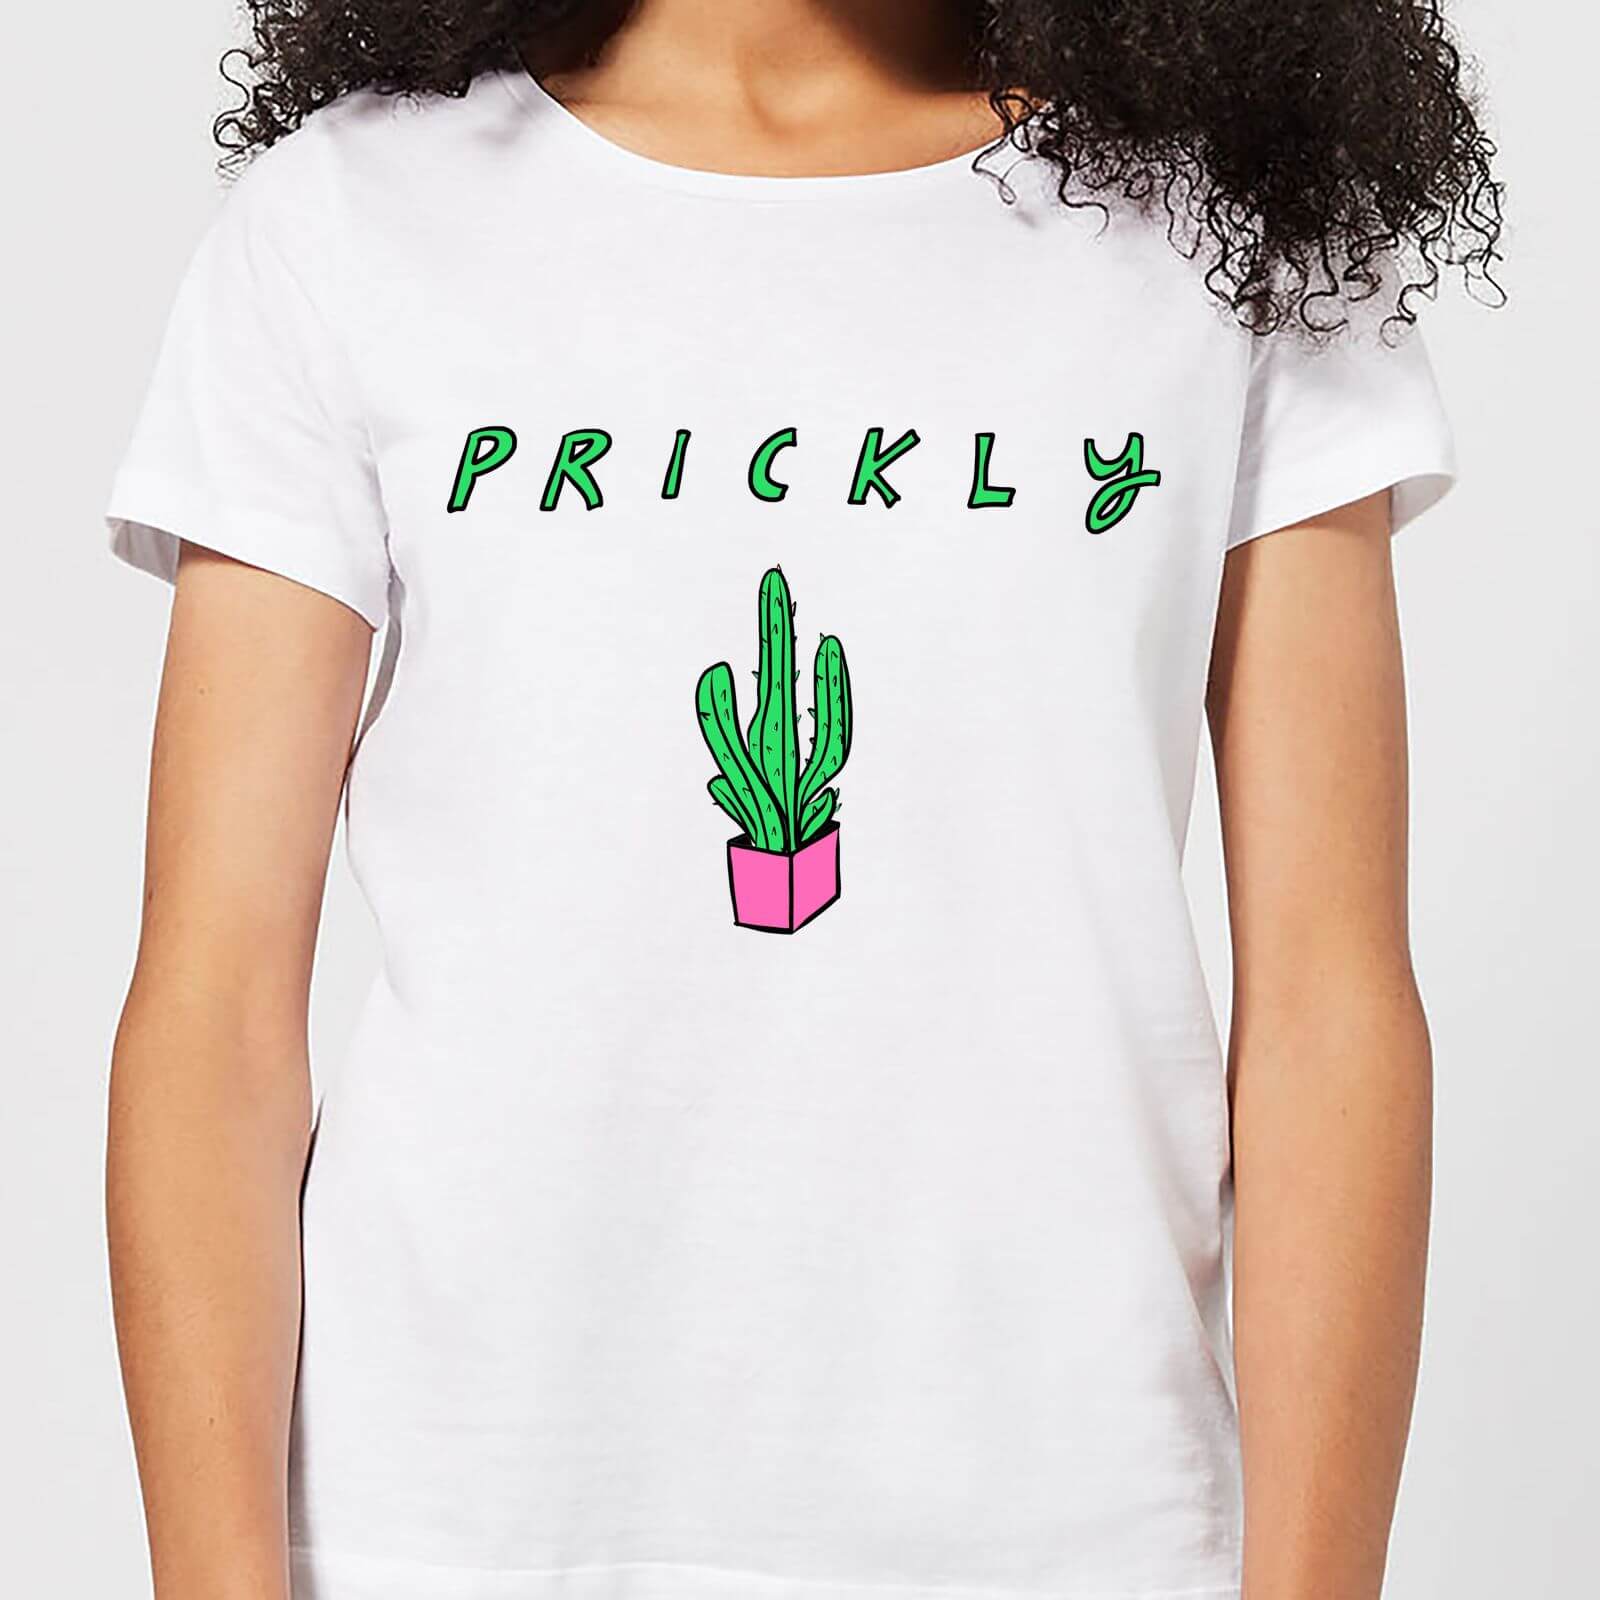 Prickly Women's T-Shirt - White - S - White